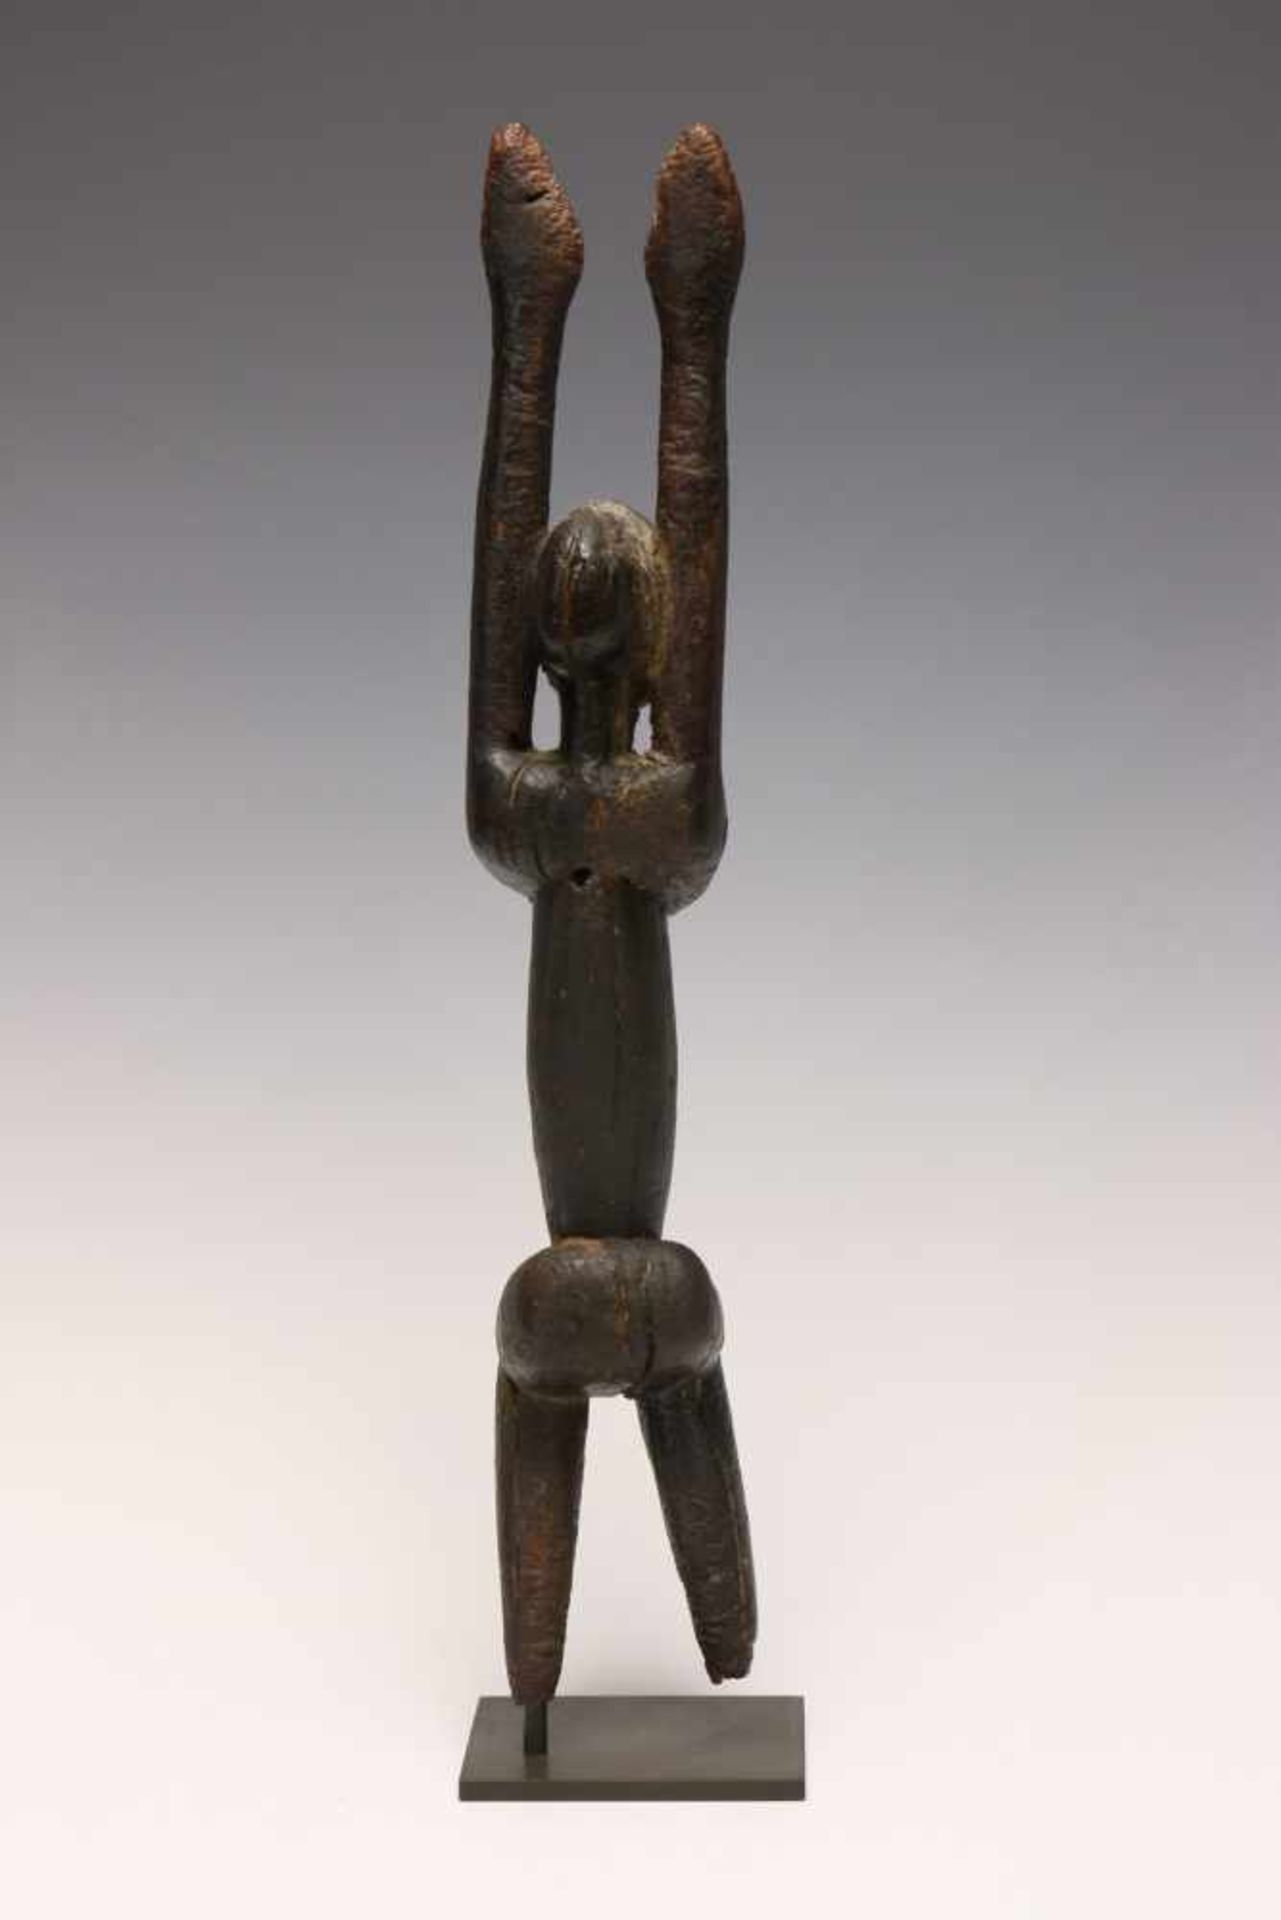 Dogon, standing antropomorphic figure,with raised arms and dark oily patina. Provenance, Steven de - Bild 5 aus 6